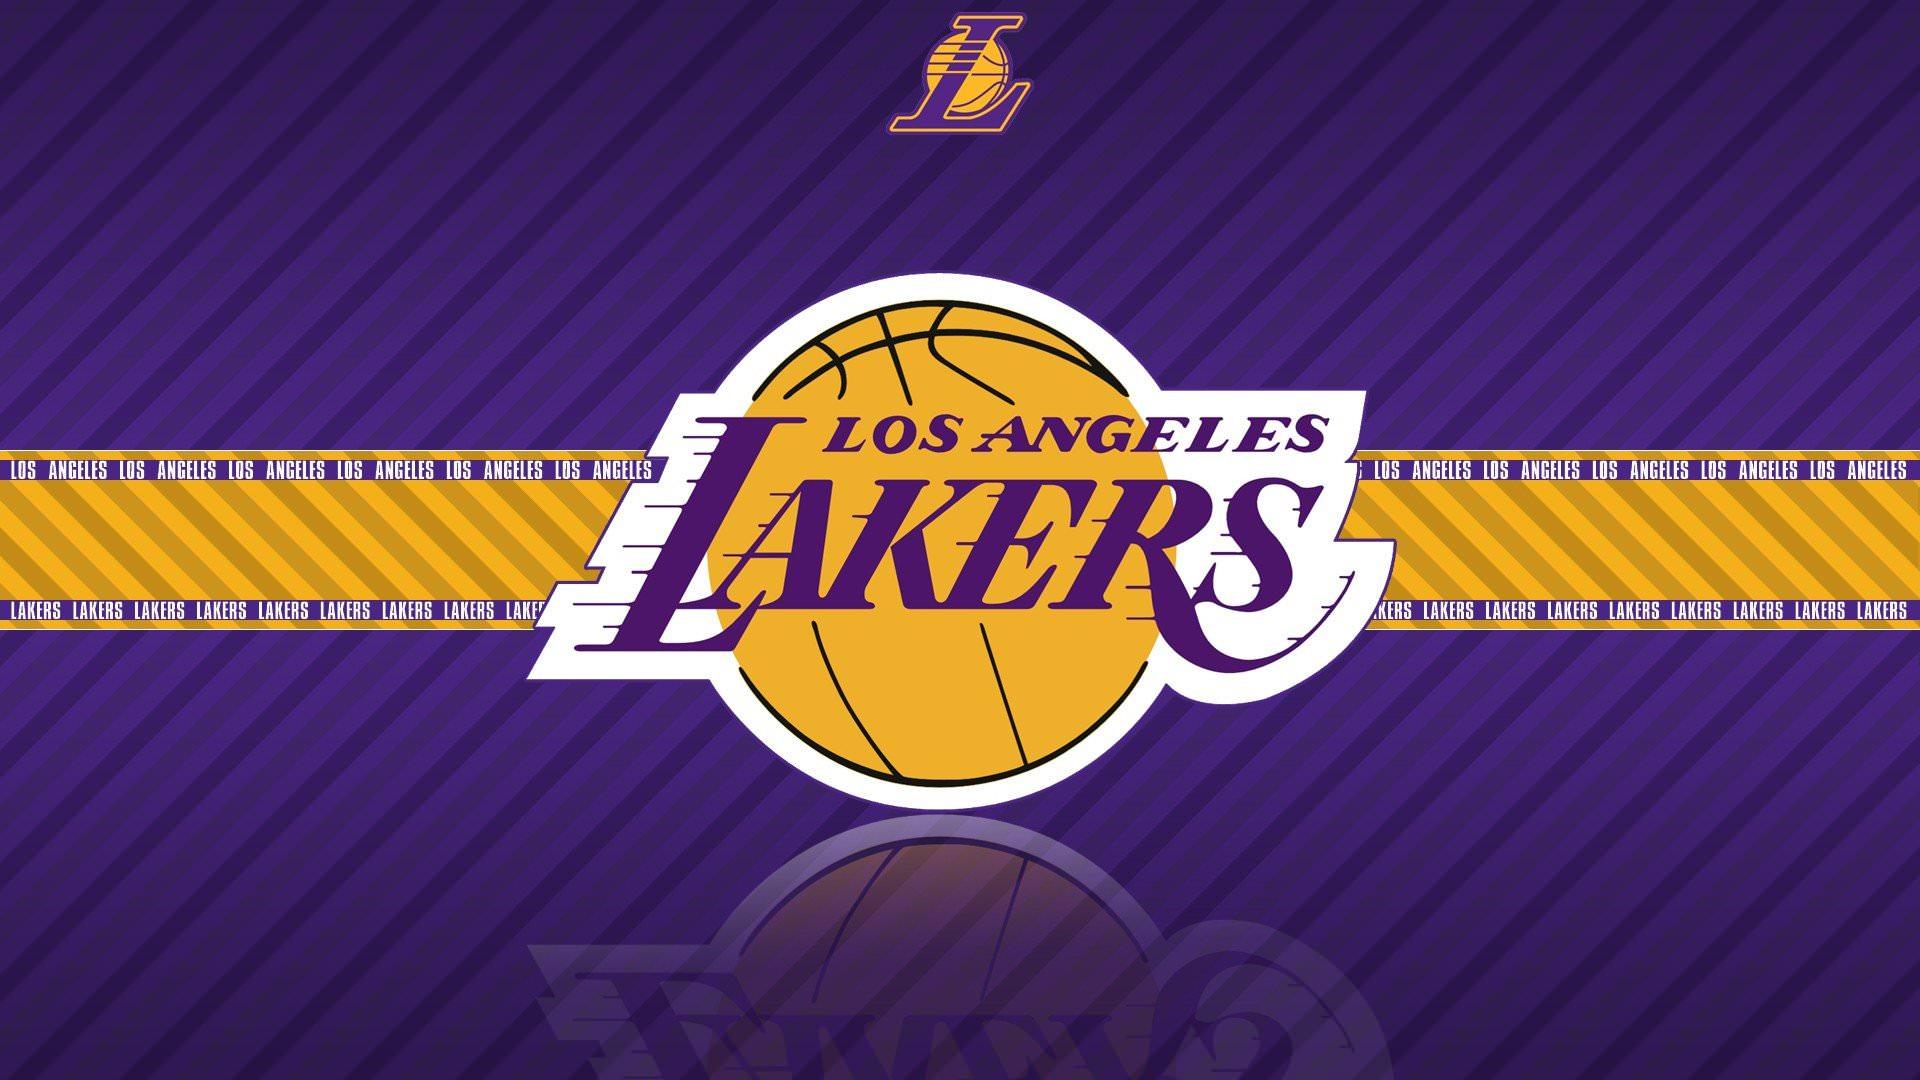 Los Angeles Lakers wallpaper 1920x1080 Full HD (1080p) desktop